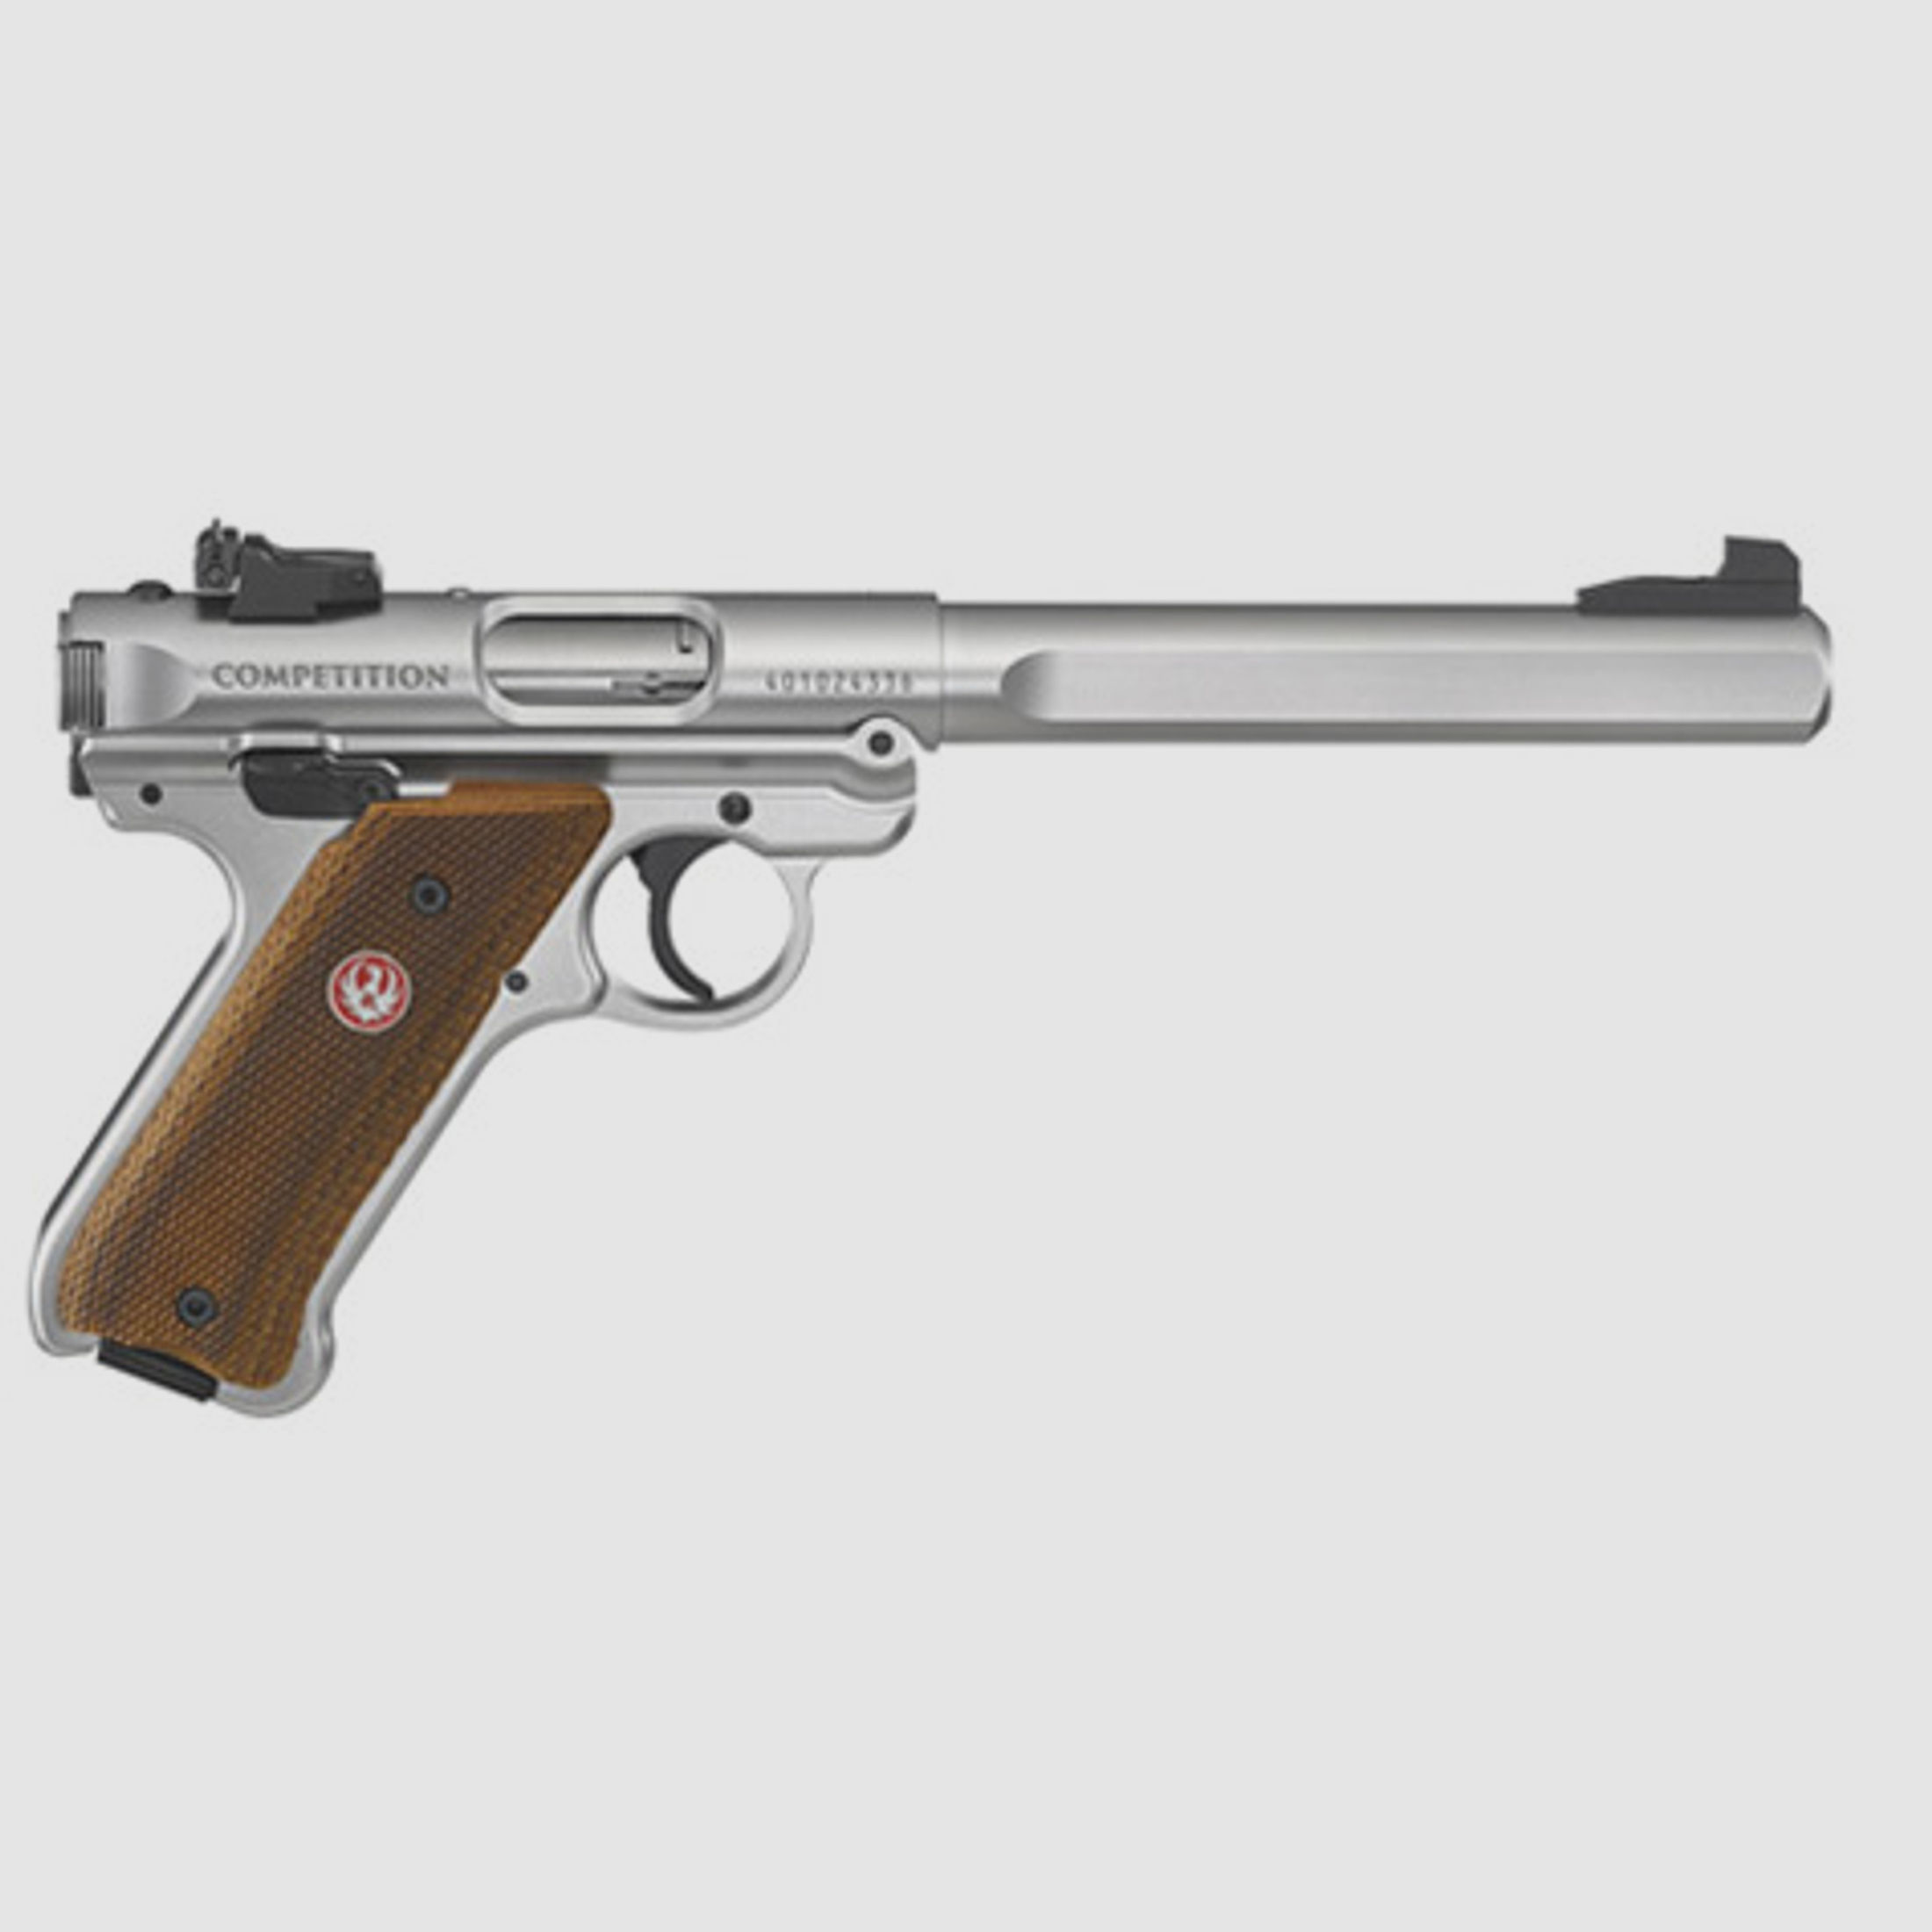 Pistole || Ruger Mark IV Competition stainless, Kaliber .22lr